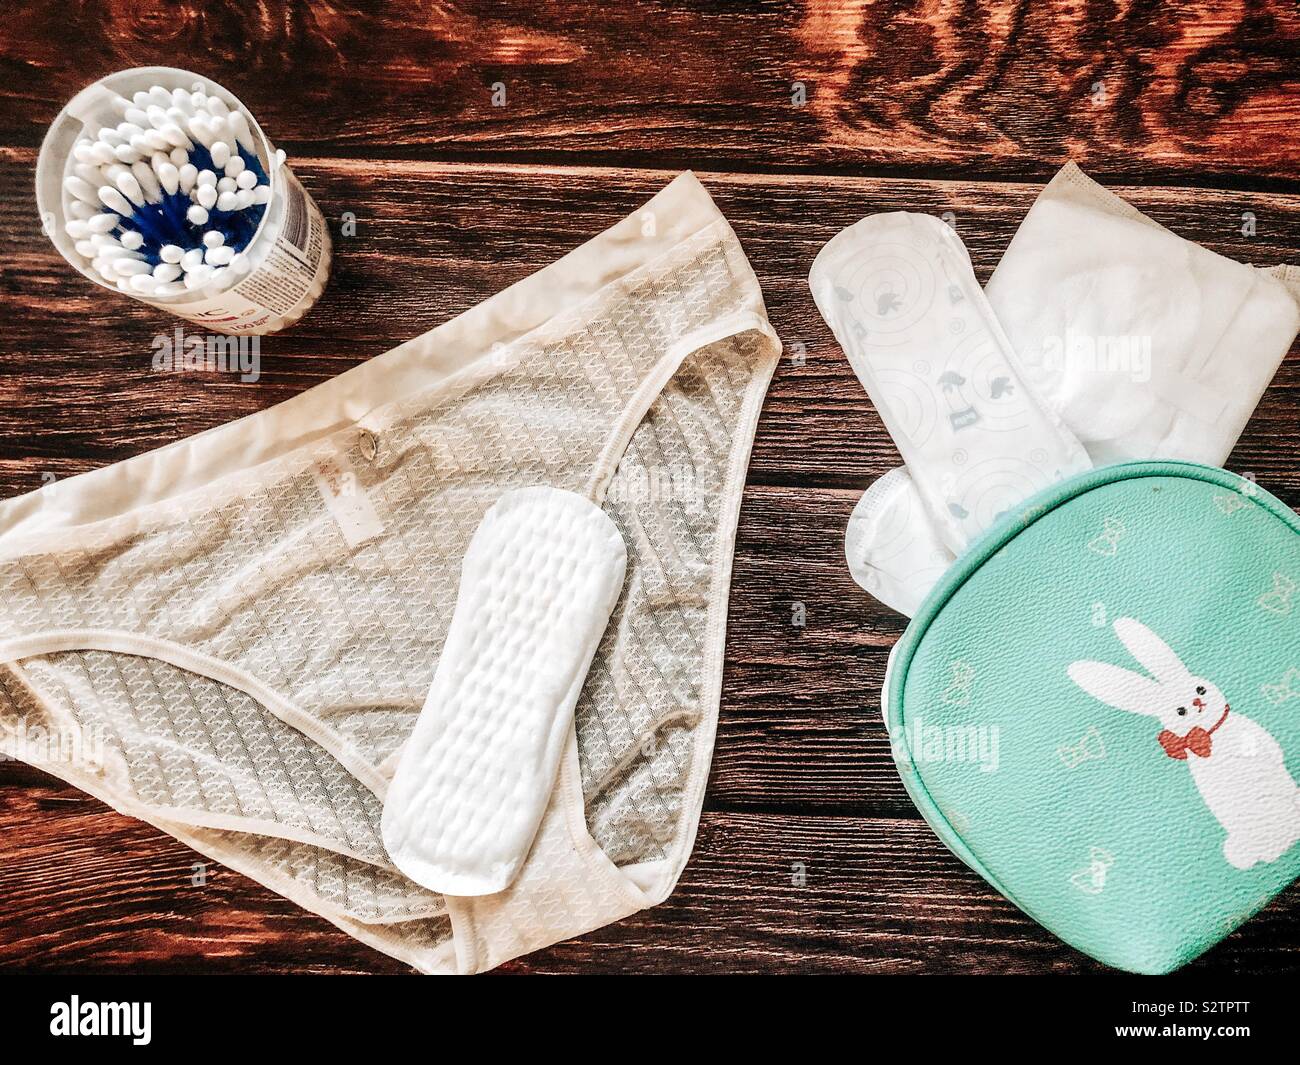 Pads cotton tampons woman feminin period Stock Photo